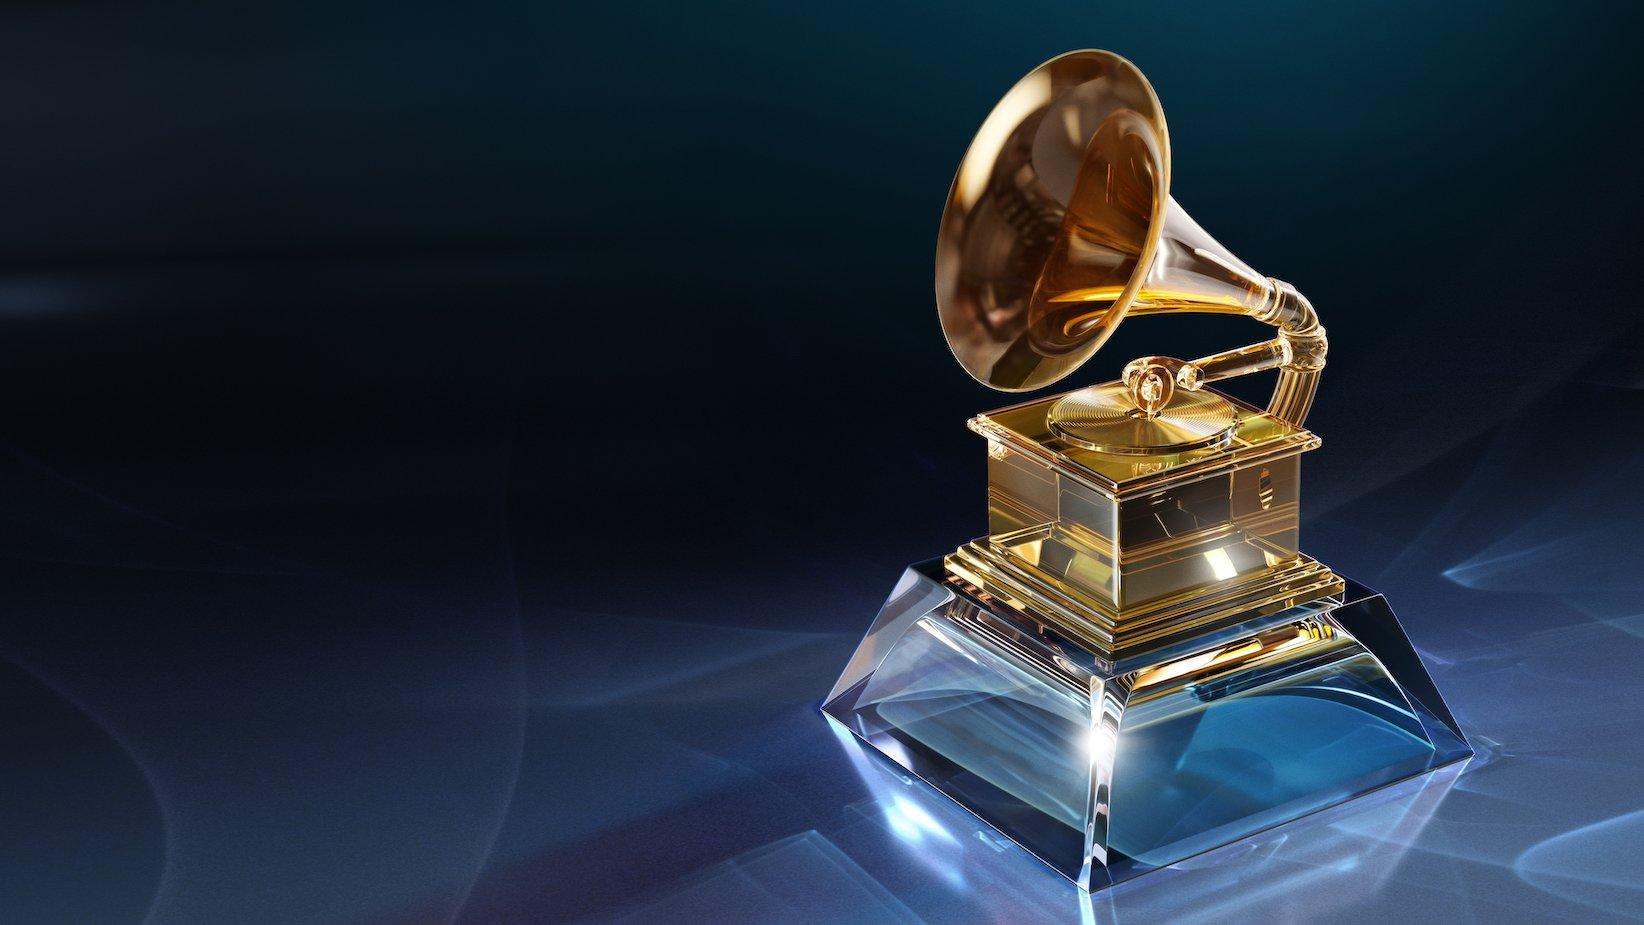 The prestigious Grammy award on a glass base